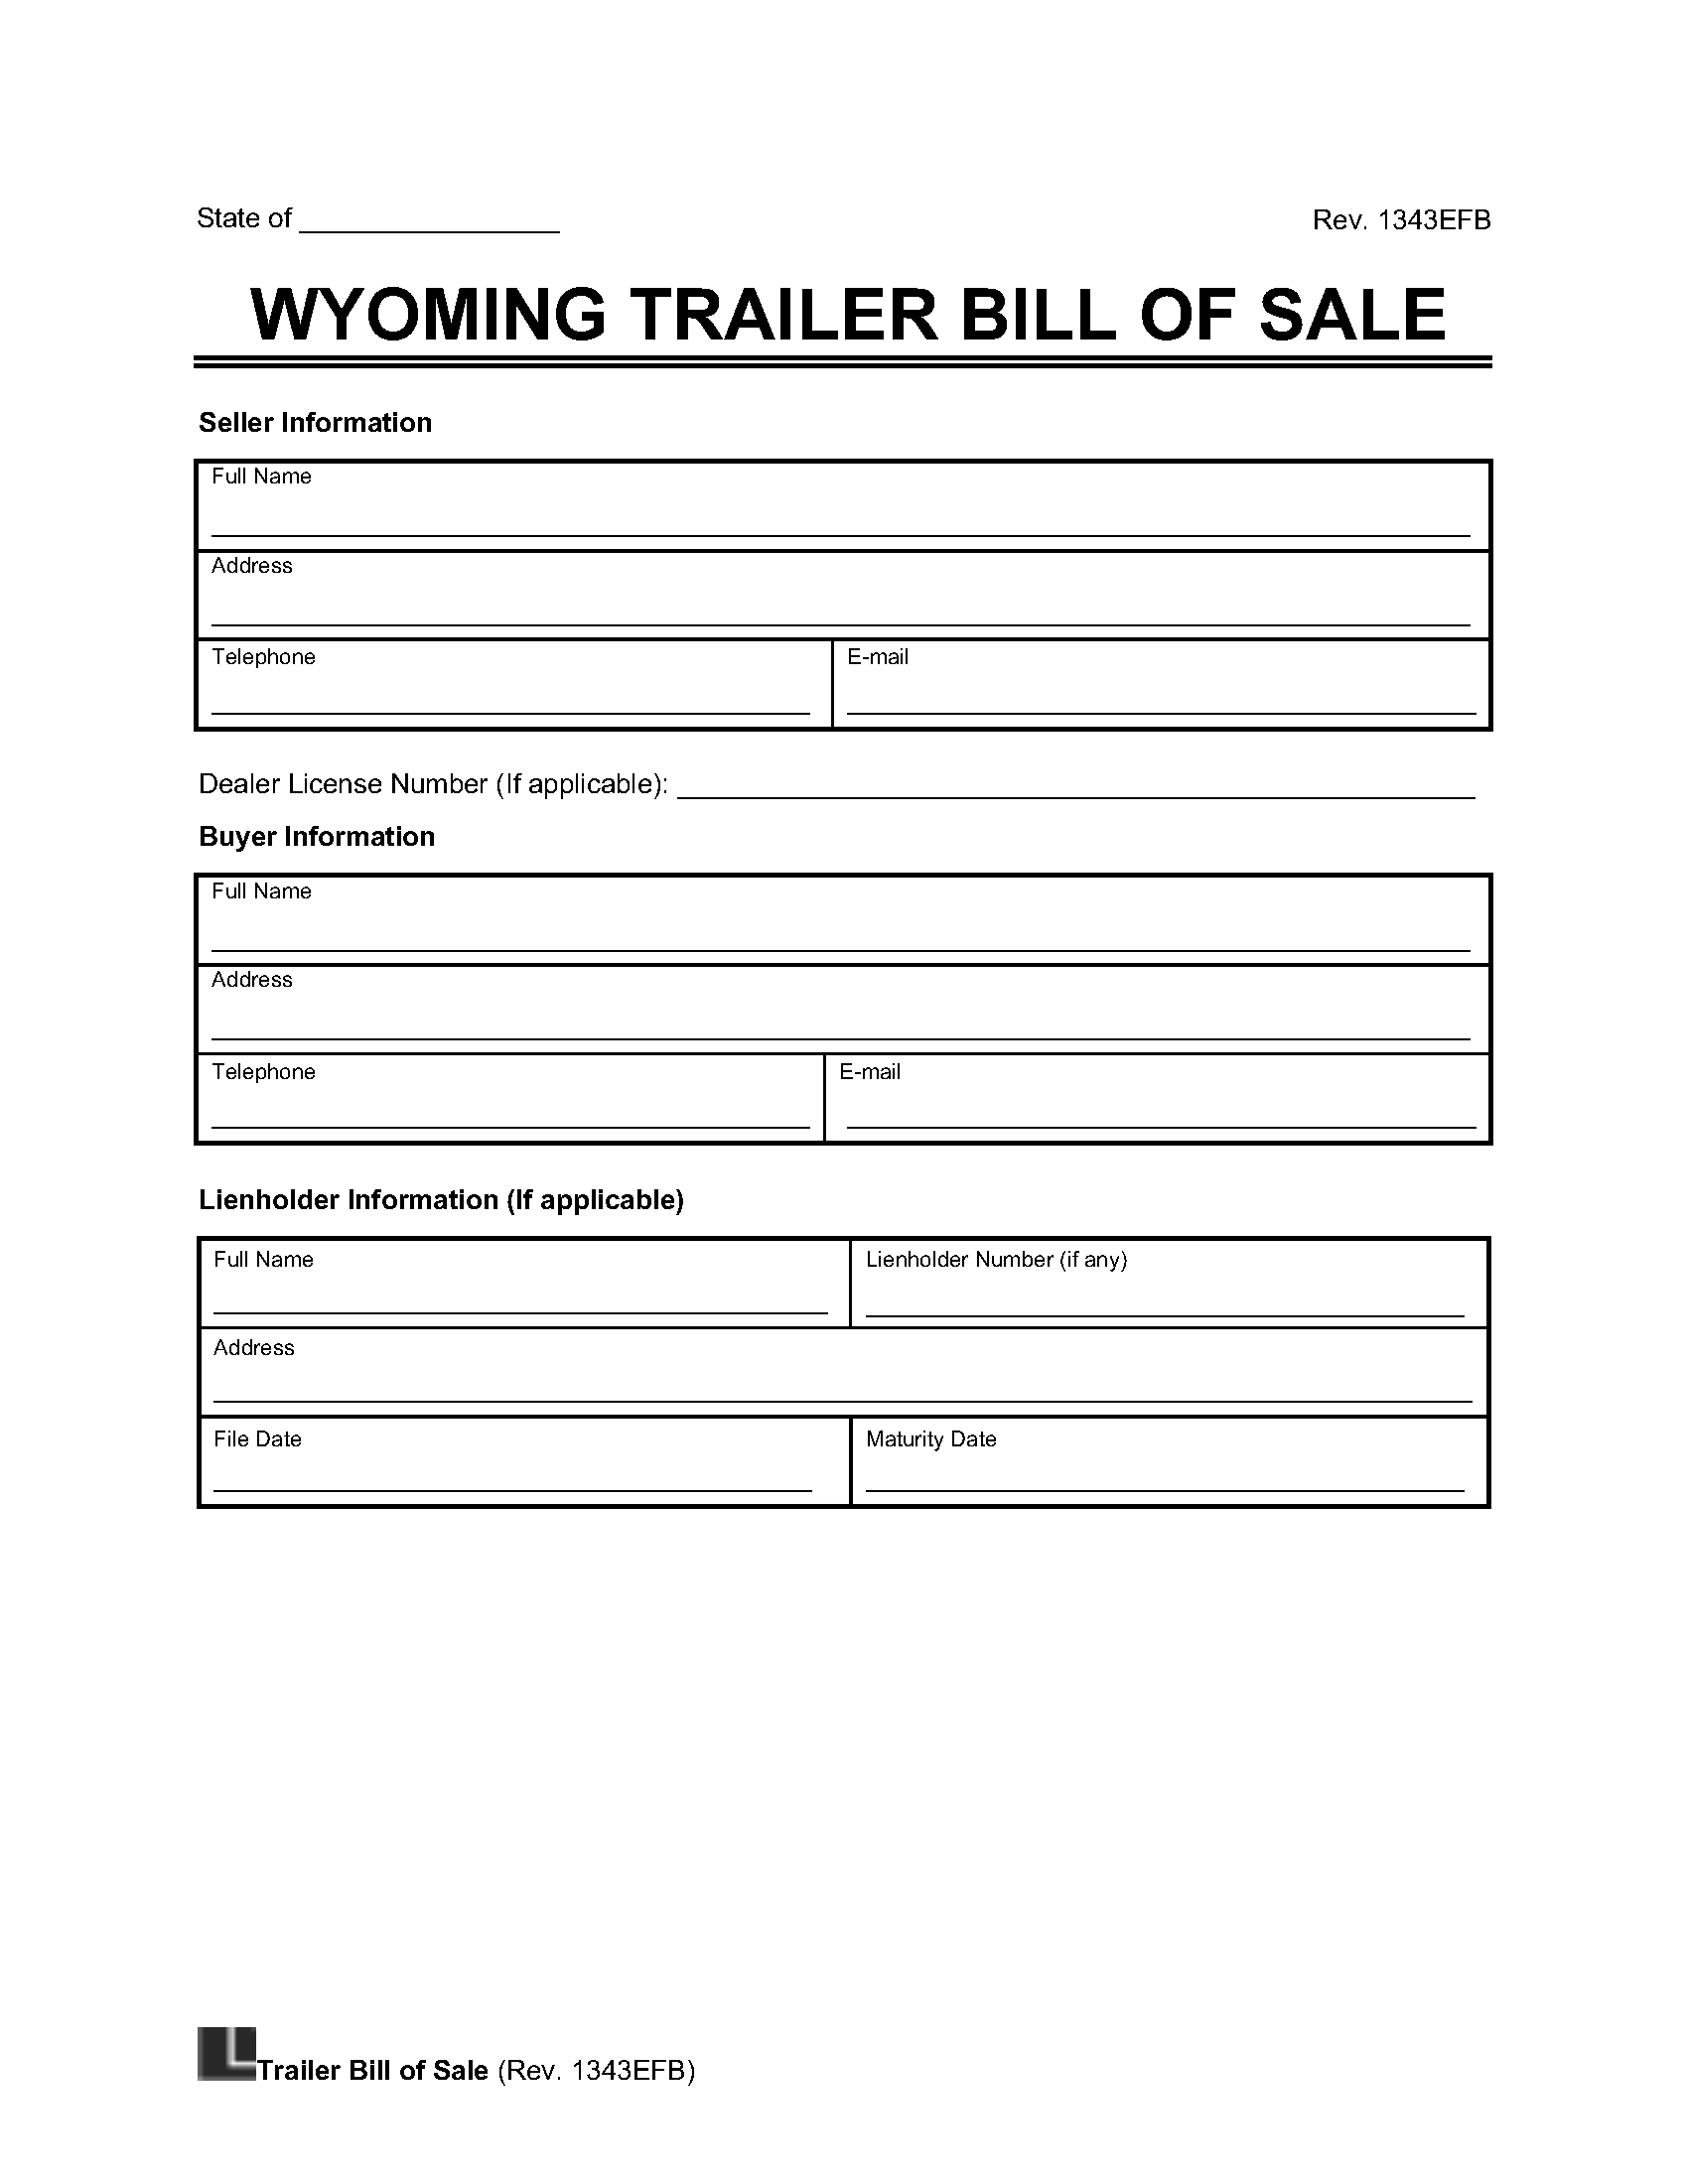 Wyoming Trailer Bill of Sale screenshot